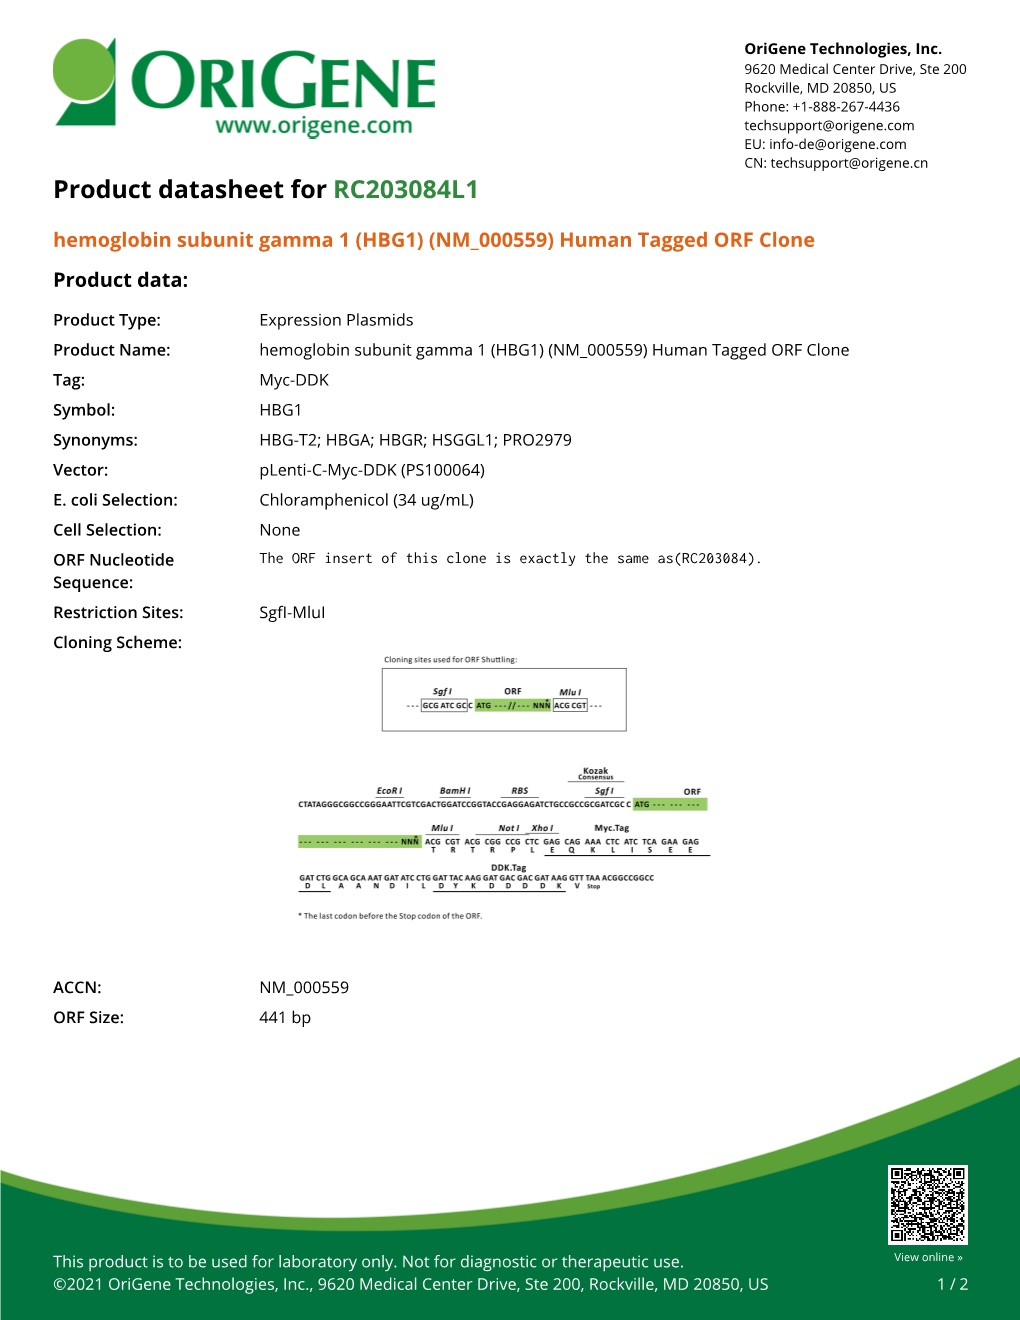 Hemoglobin Subunit Gamma 1 (HBG1) (NM 000559) Human Tagged ORF Clone Product Data